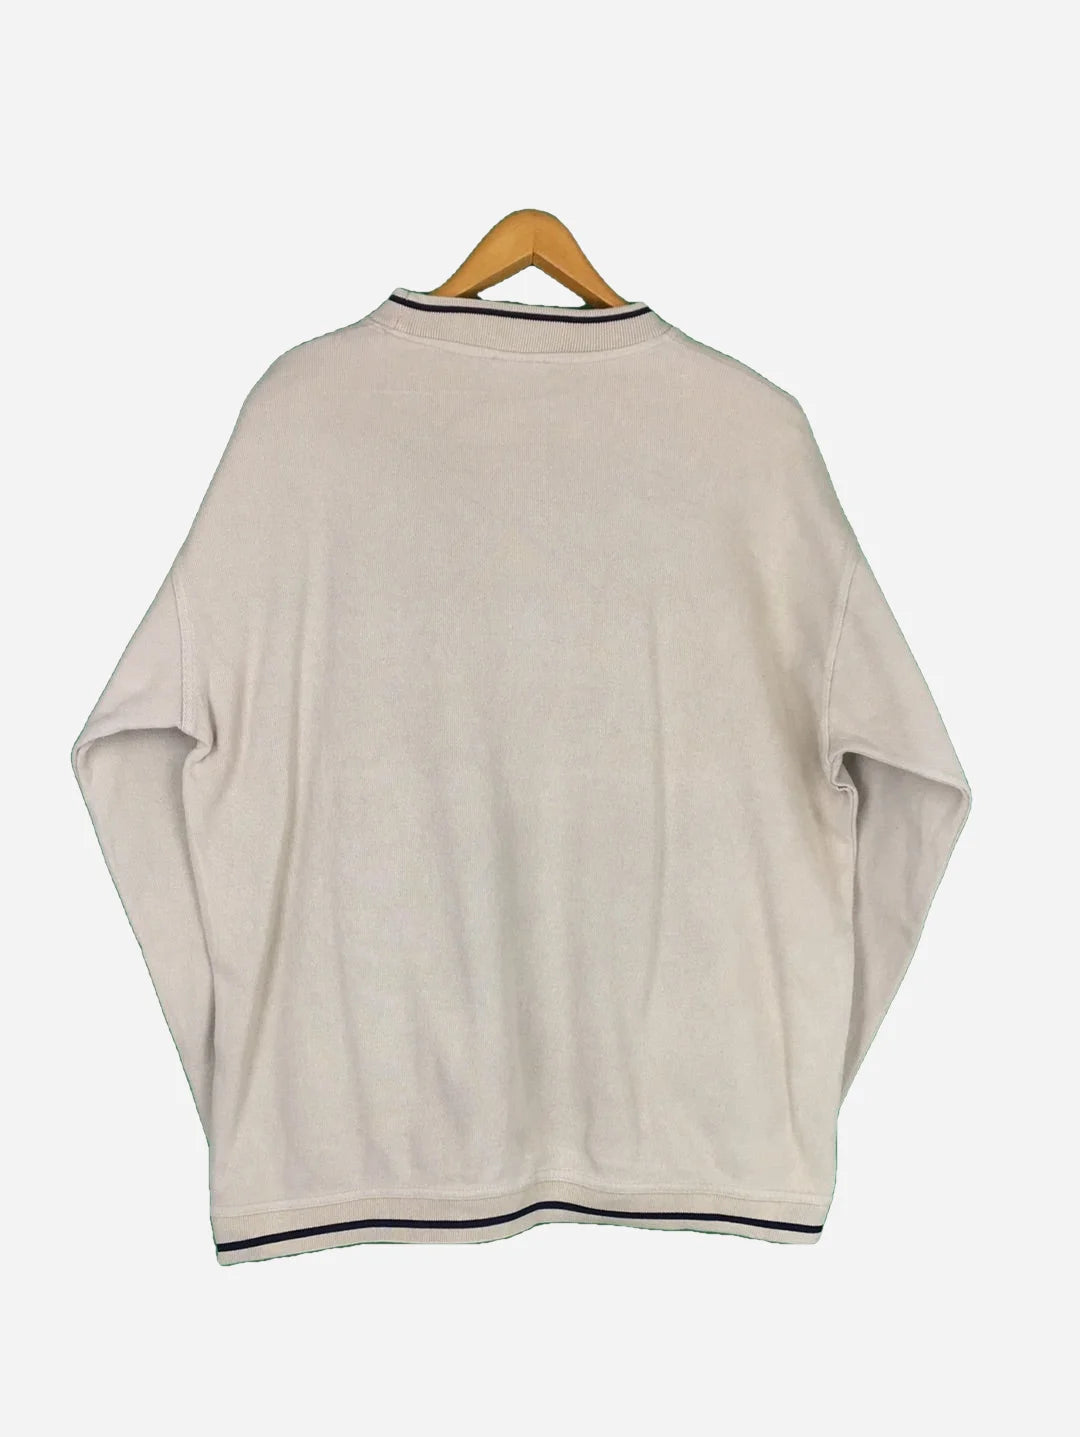 Fishbone Sweater (XL)